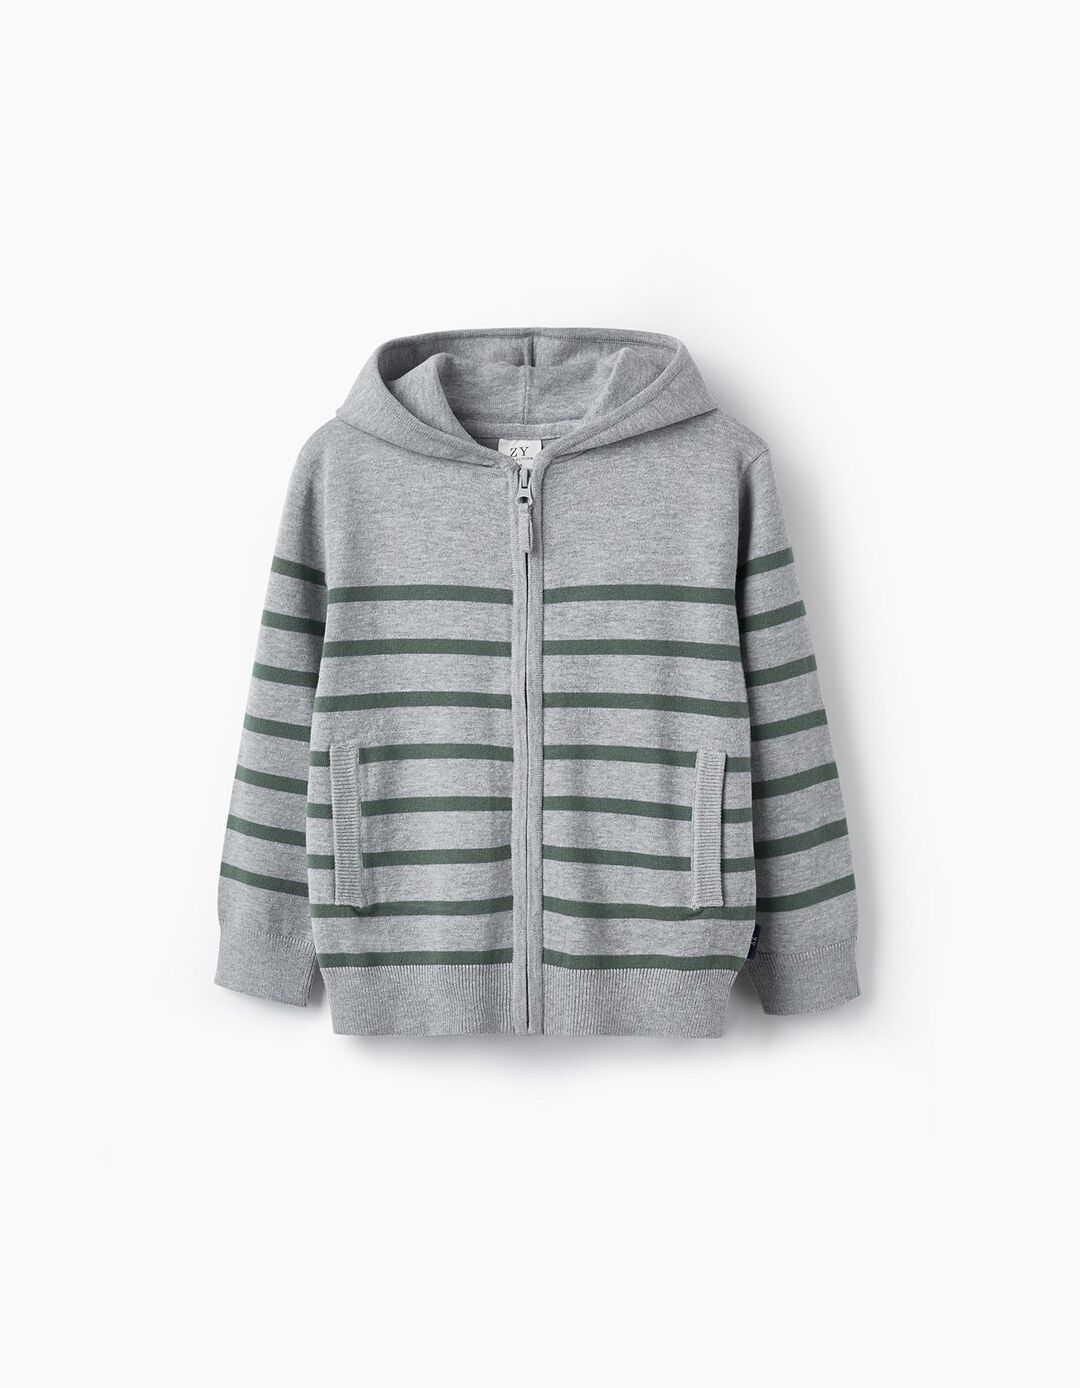 Striped Knit Jacket for Boys, Grey/Green